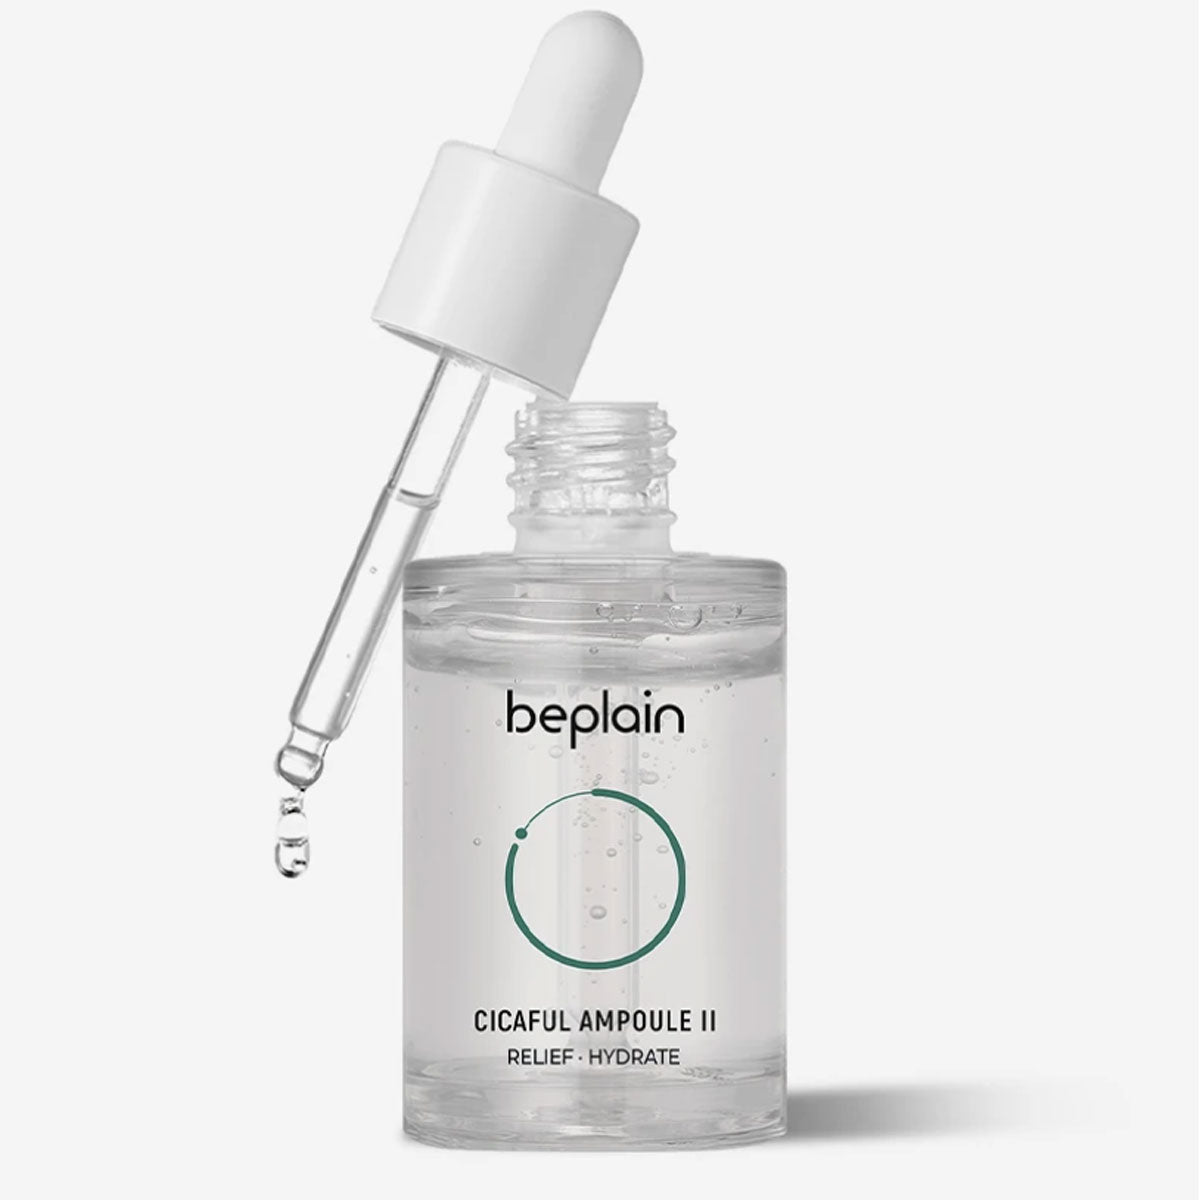 beplain - Cicaful Ampoule II - 5 ml/ 30 ml